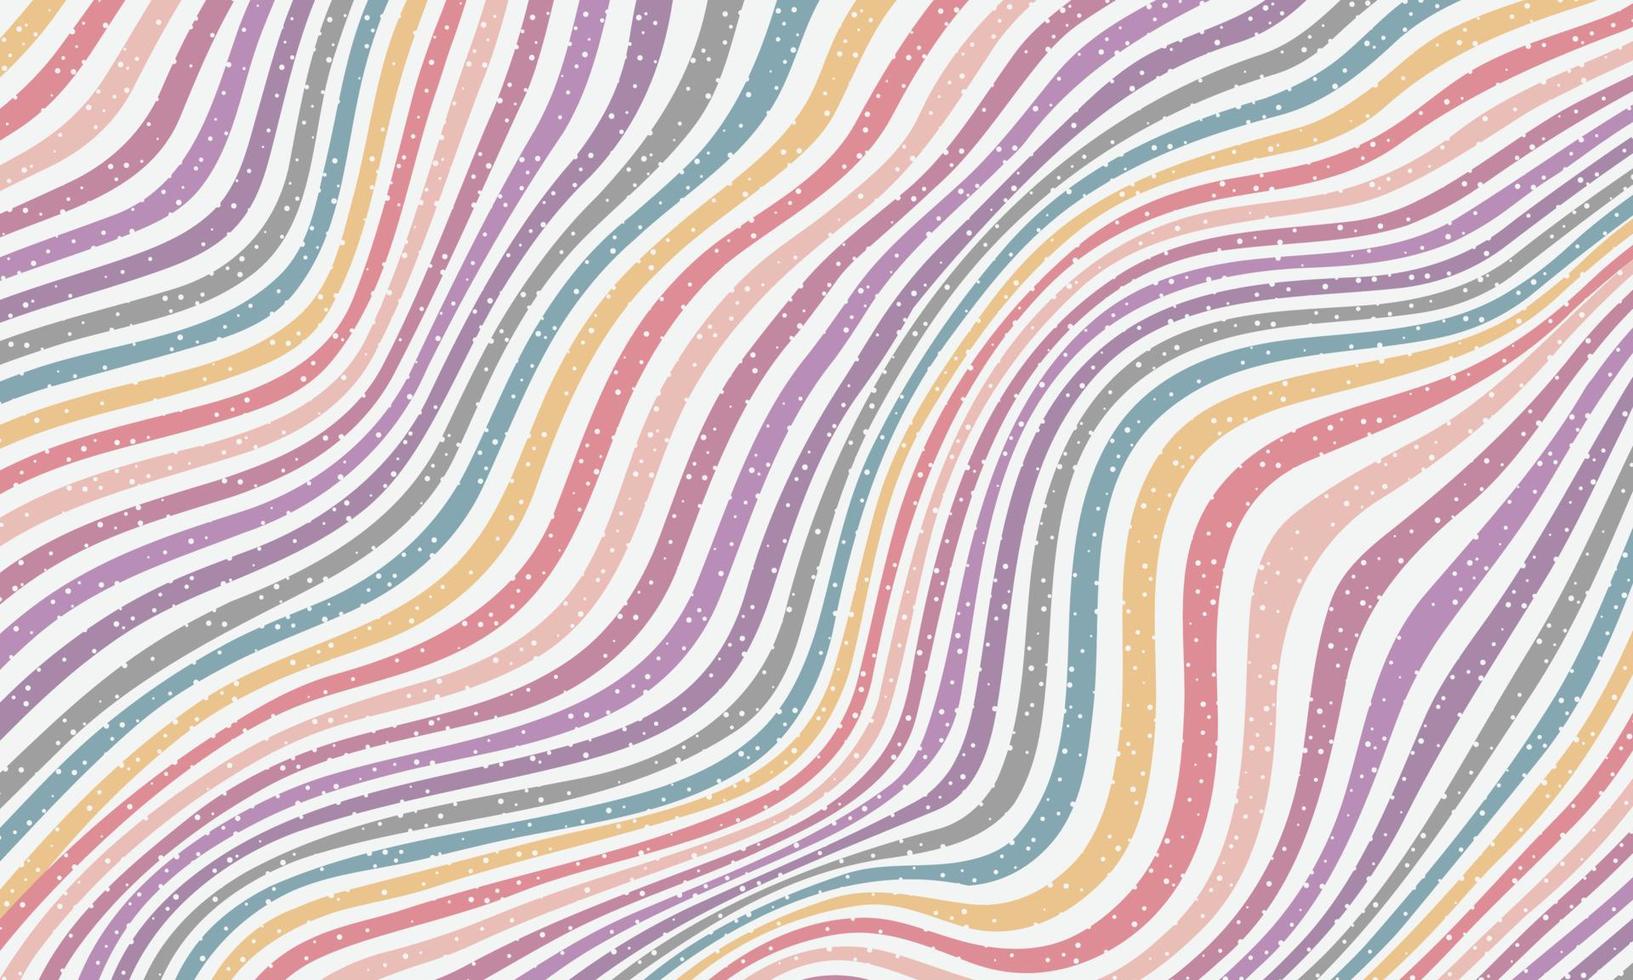 abstracte golf of golvende strepen pastel kleur achtergrond met witte stippen verspreid. vector